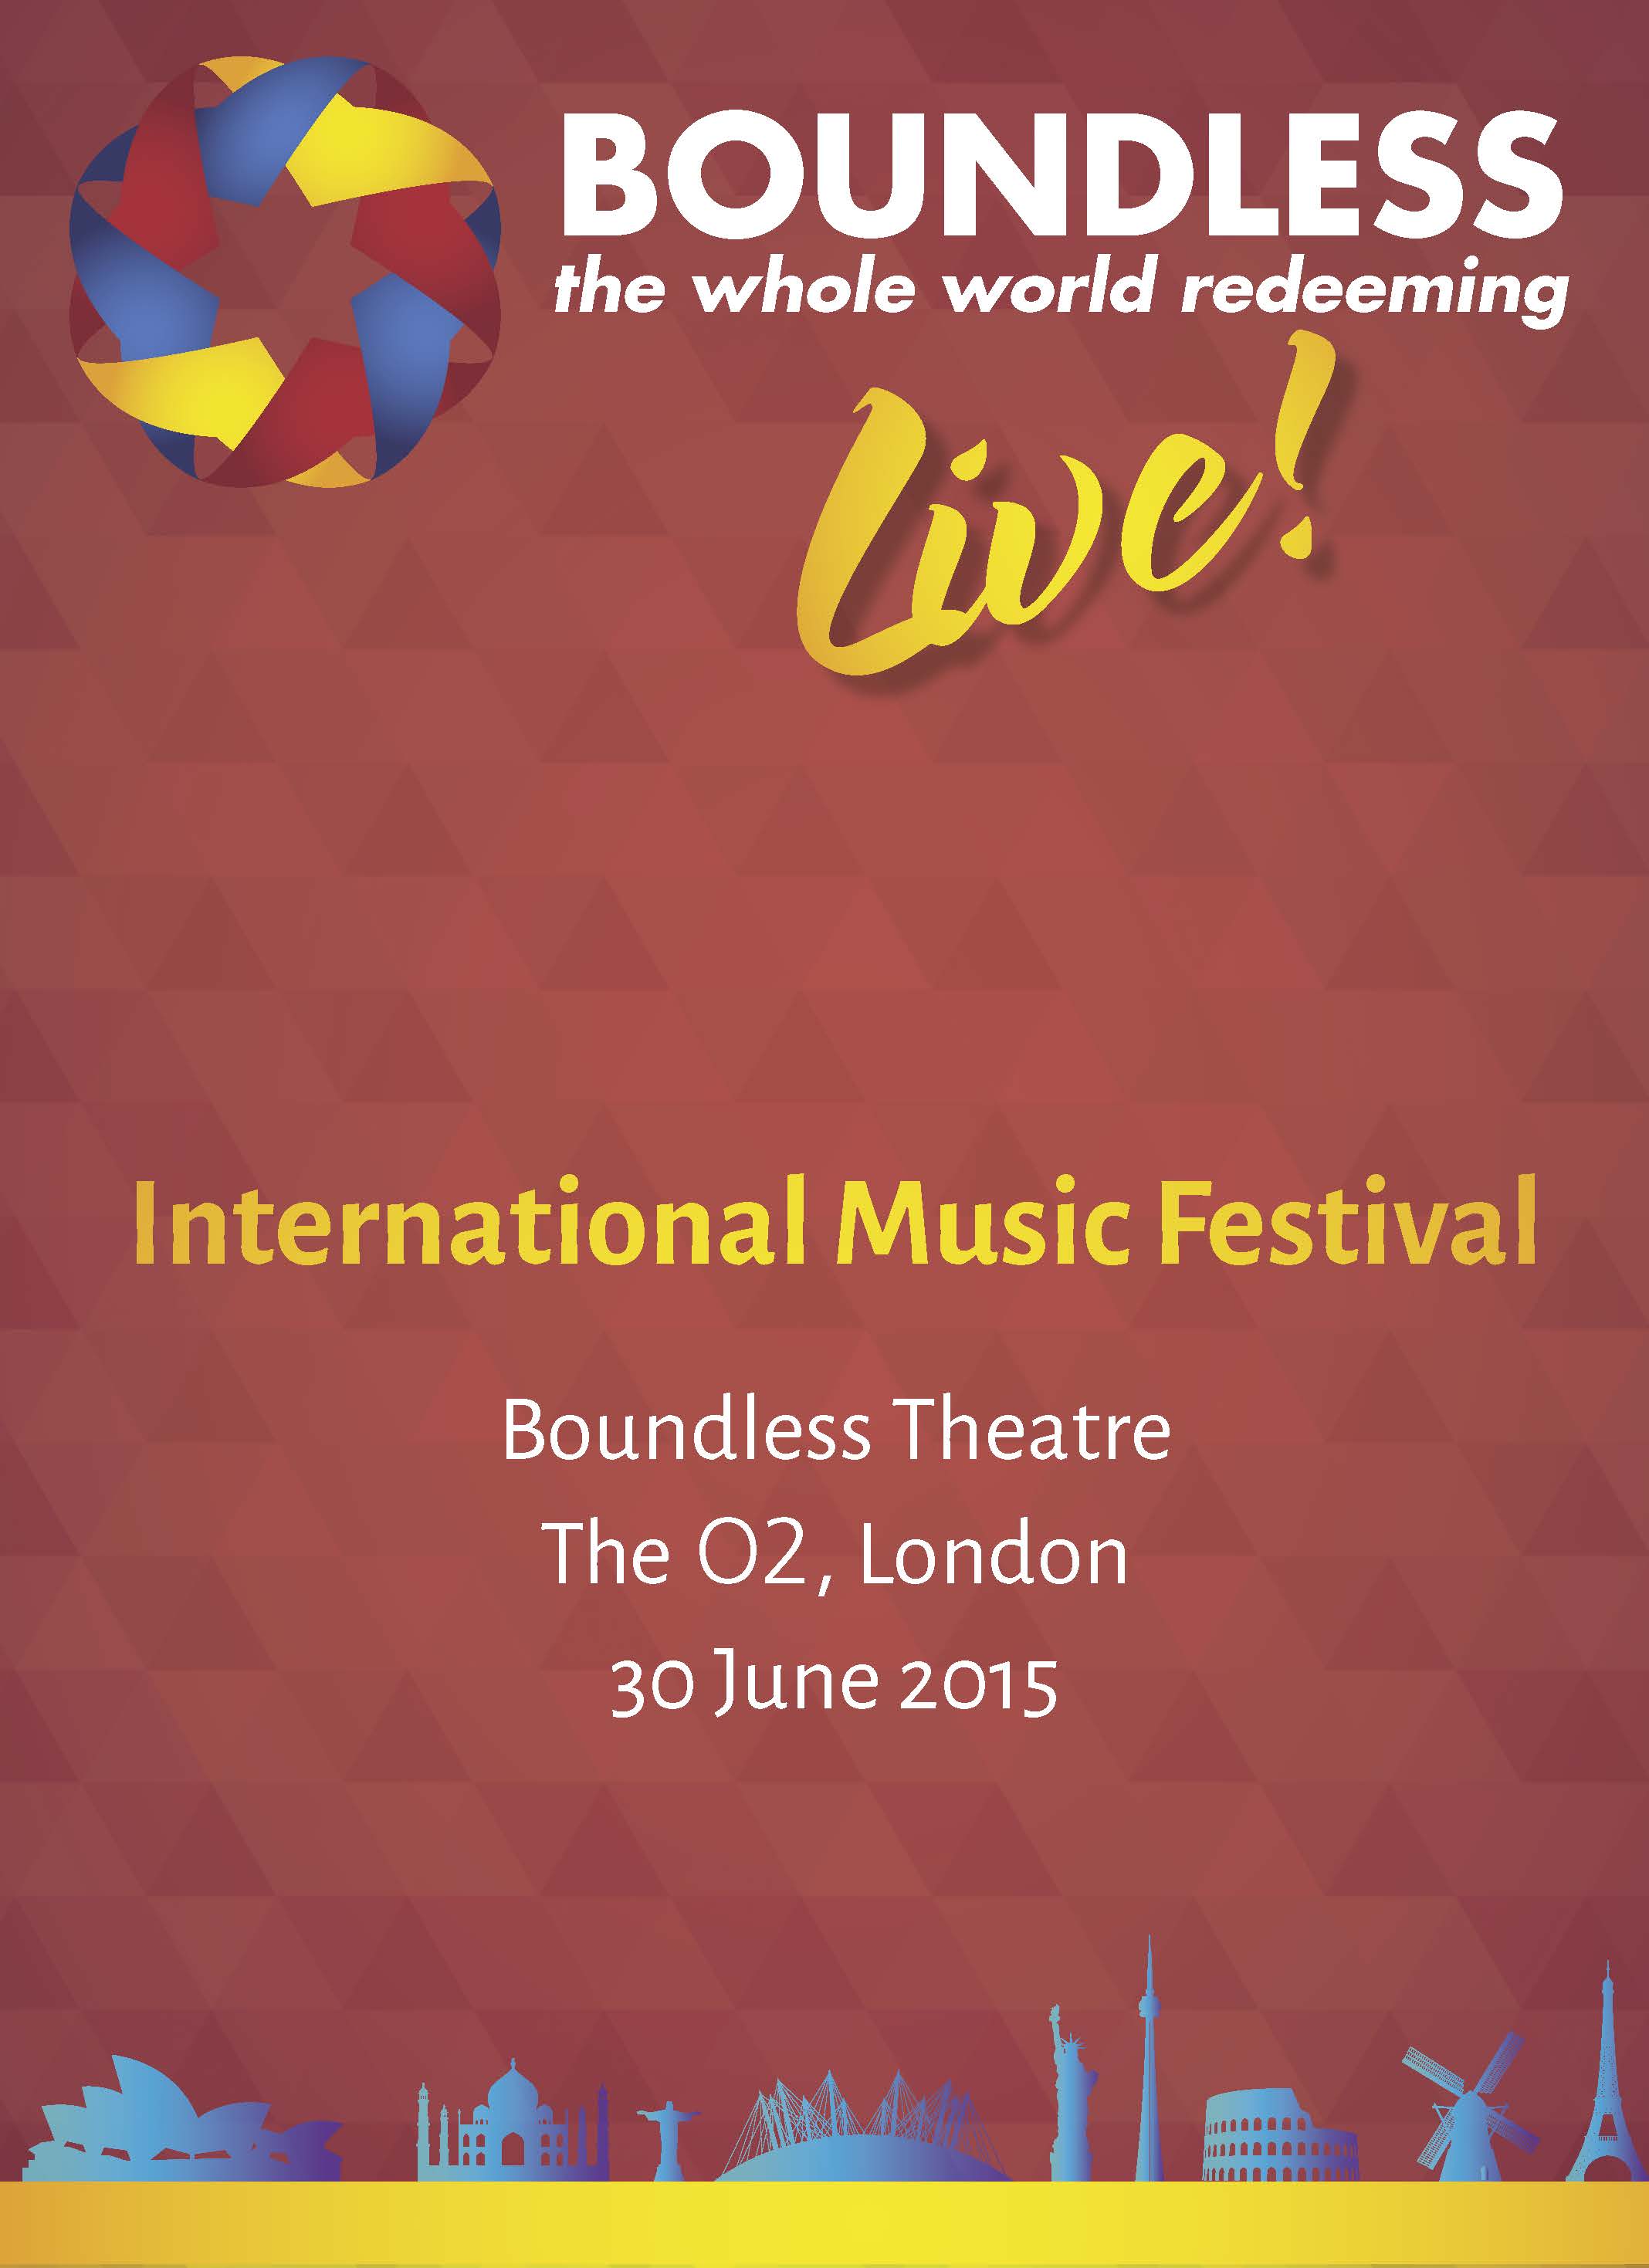 Boundless Live! Concert - International Music Festival